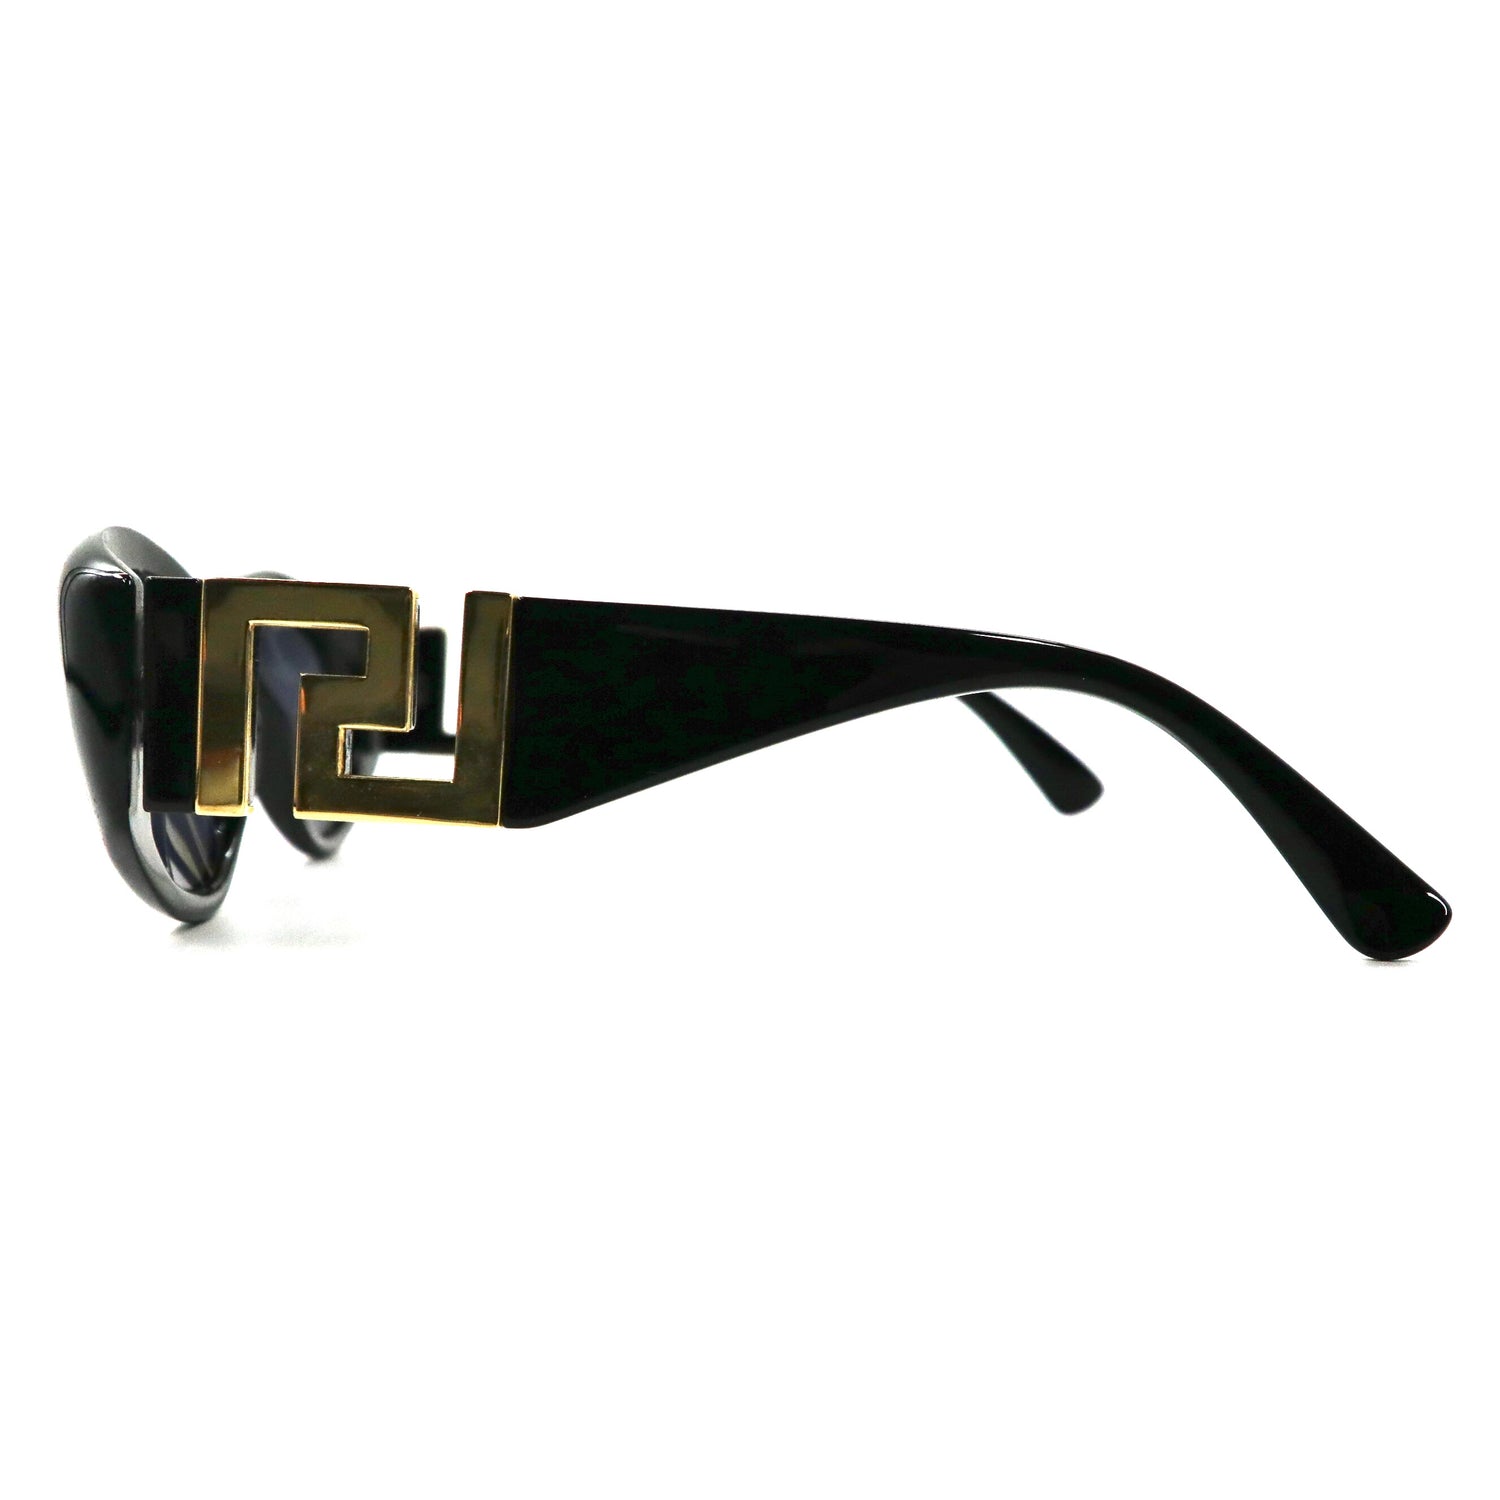 Gianni VERSACE Sunglasses Blackside Logo T24 Vintage Italian Made